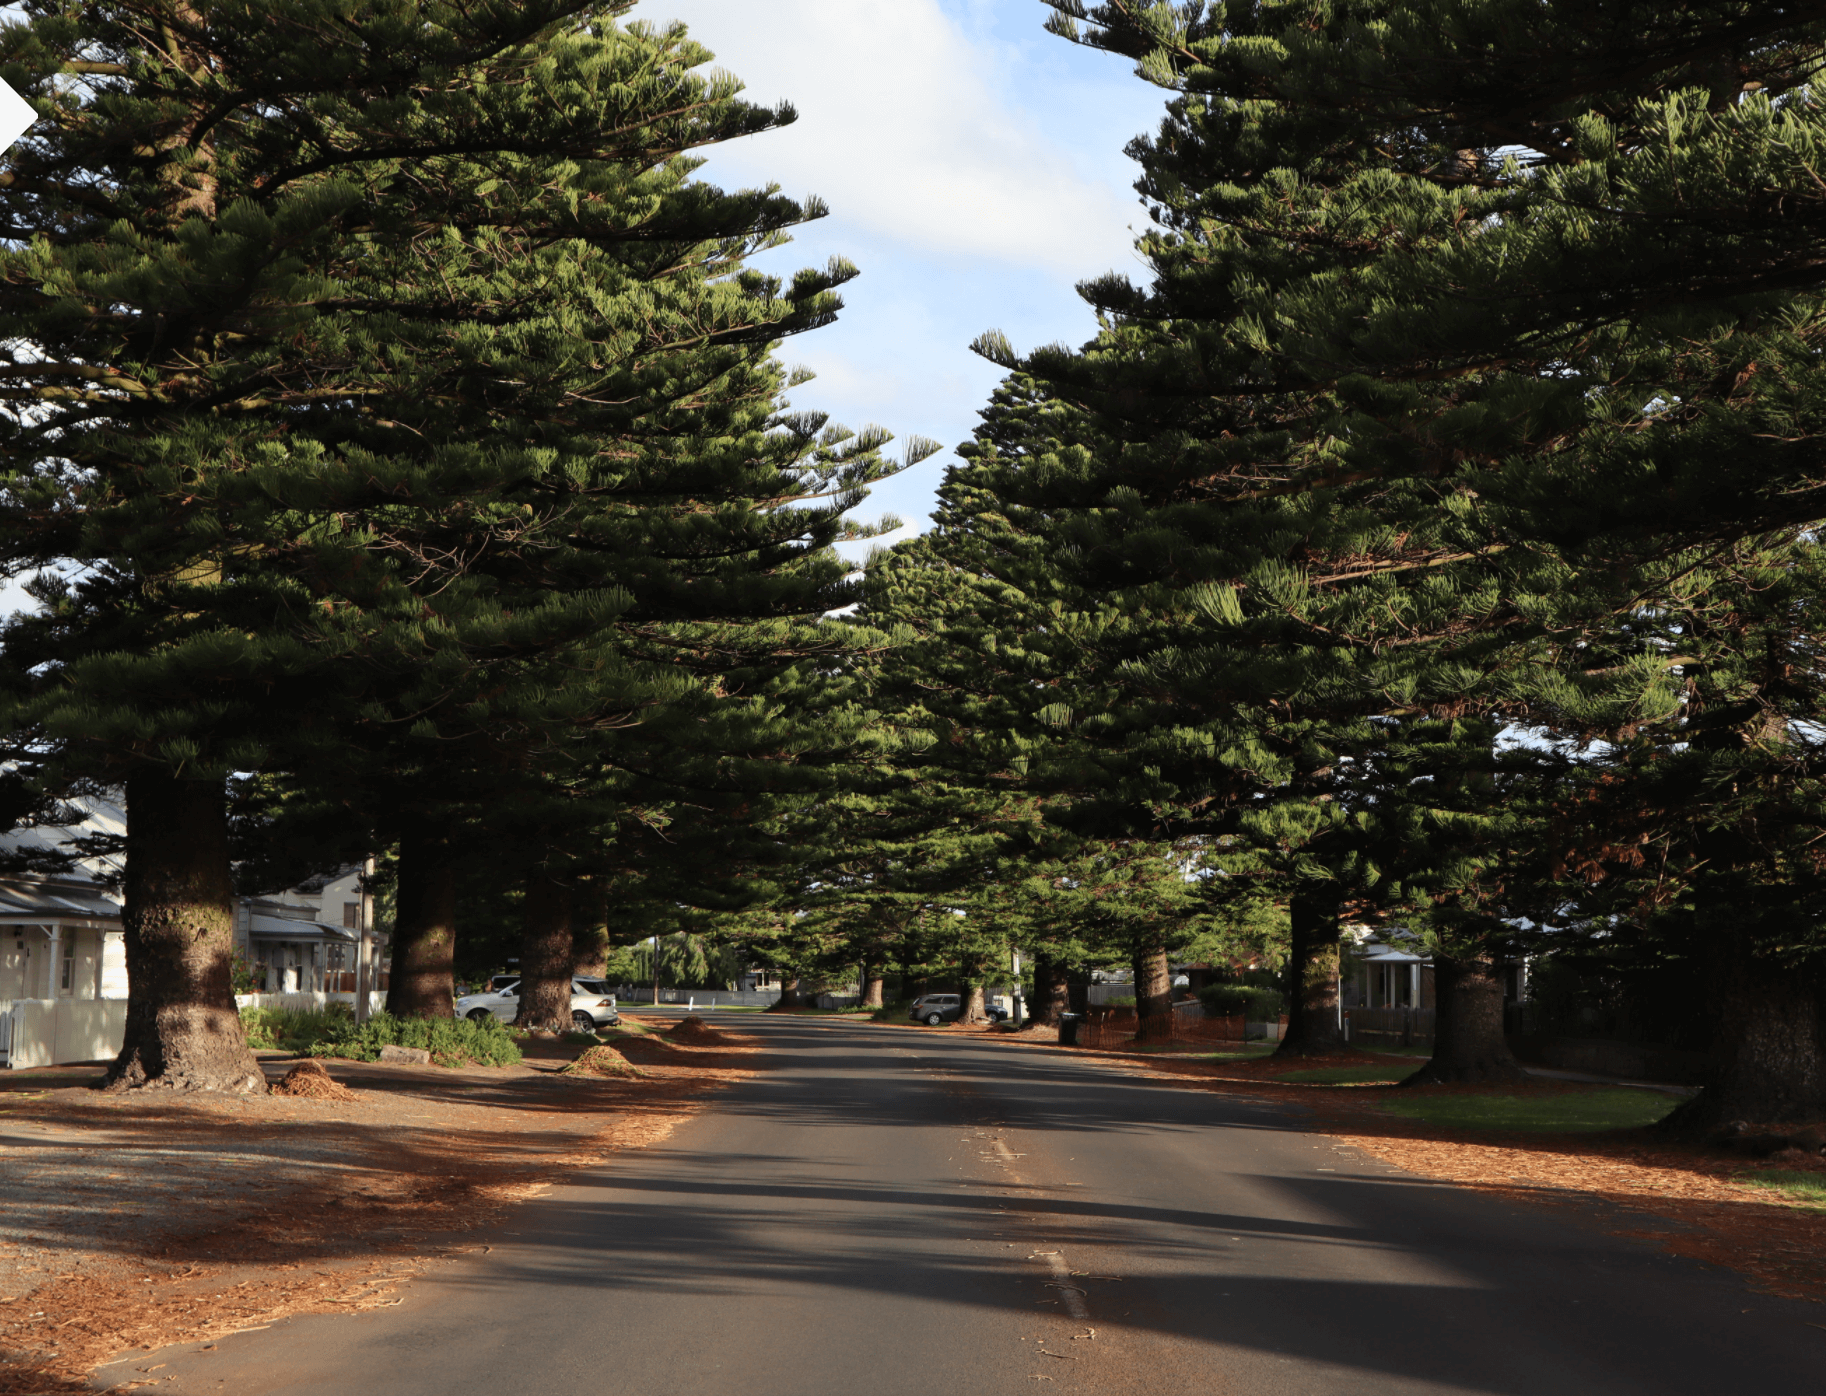 norfolk pines along a street in port fairy